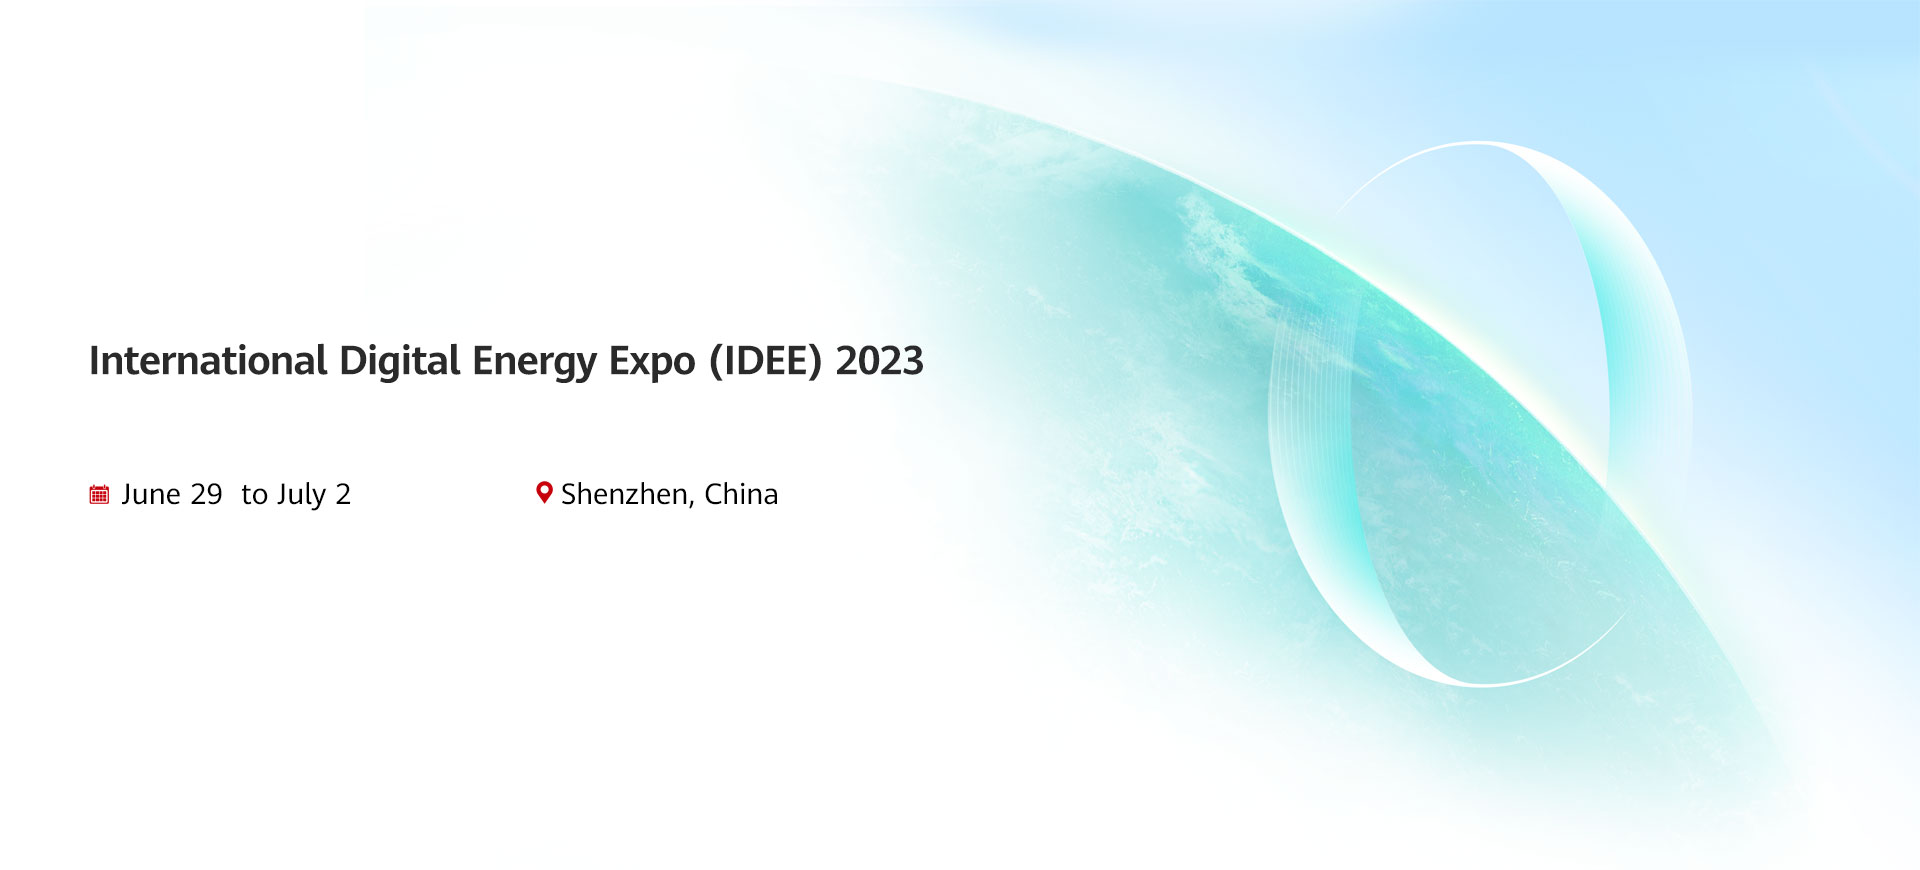 International Digital Energy Expo (IDEE) 2023